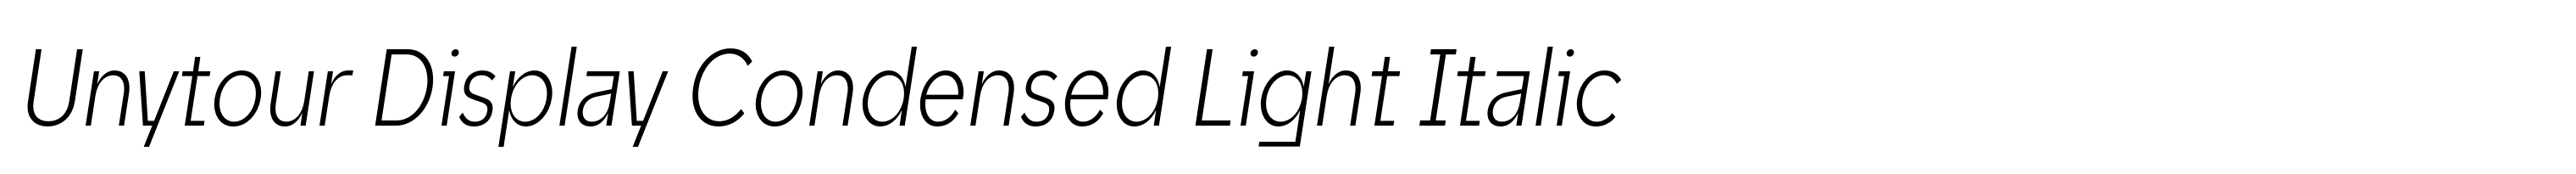 Unytour Display Condensed Light Italic